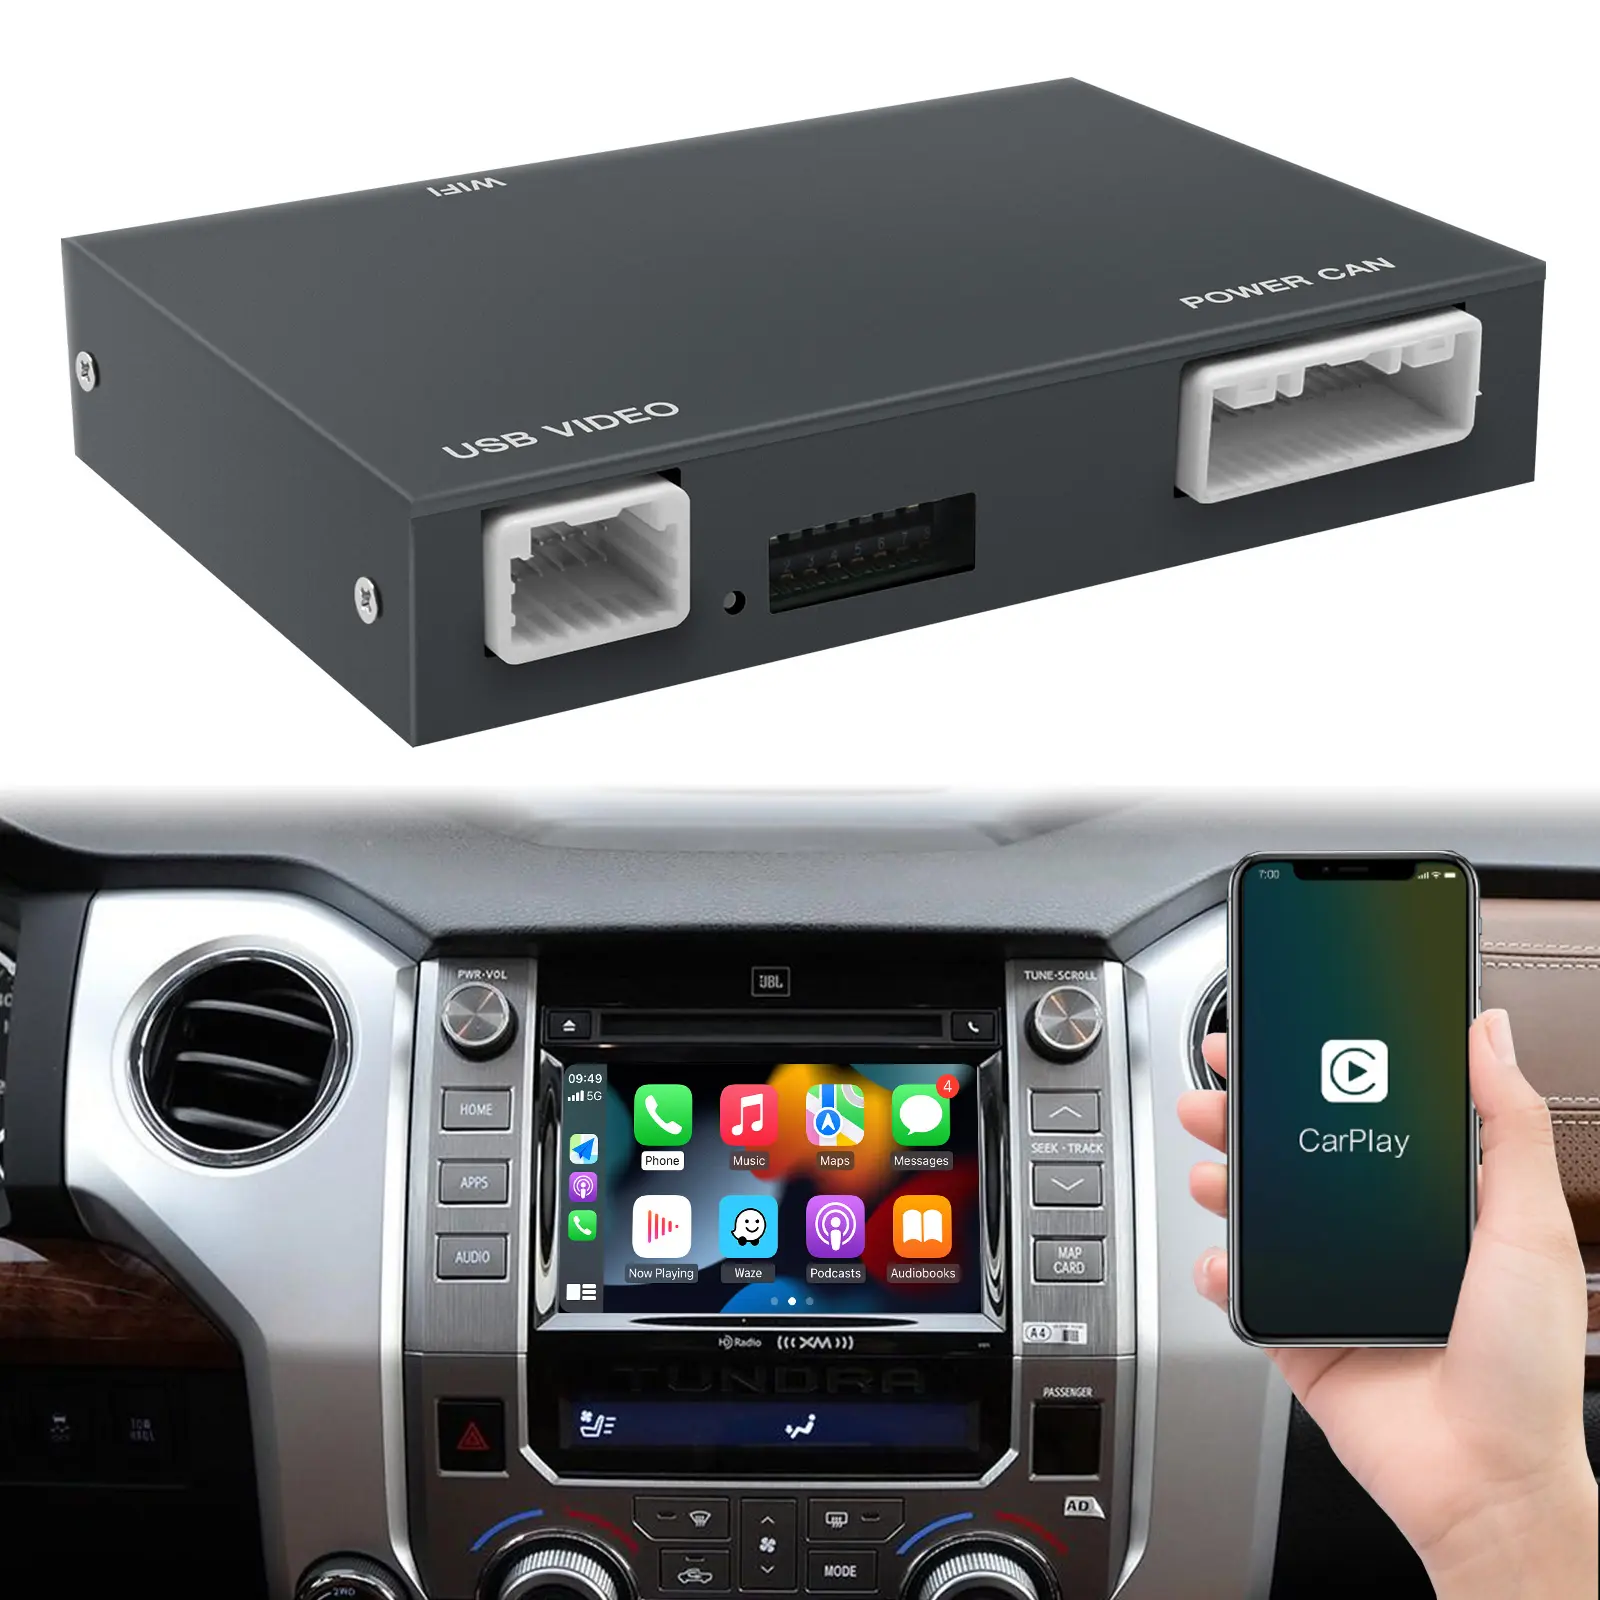 Autoabc Plug and play reproductor de vídeo para coche navegación inalámbrica Carplay AirPlay para Toyota Tundra Android auto Carplay codec